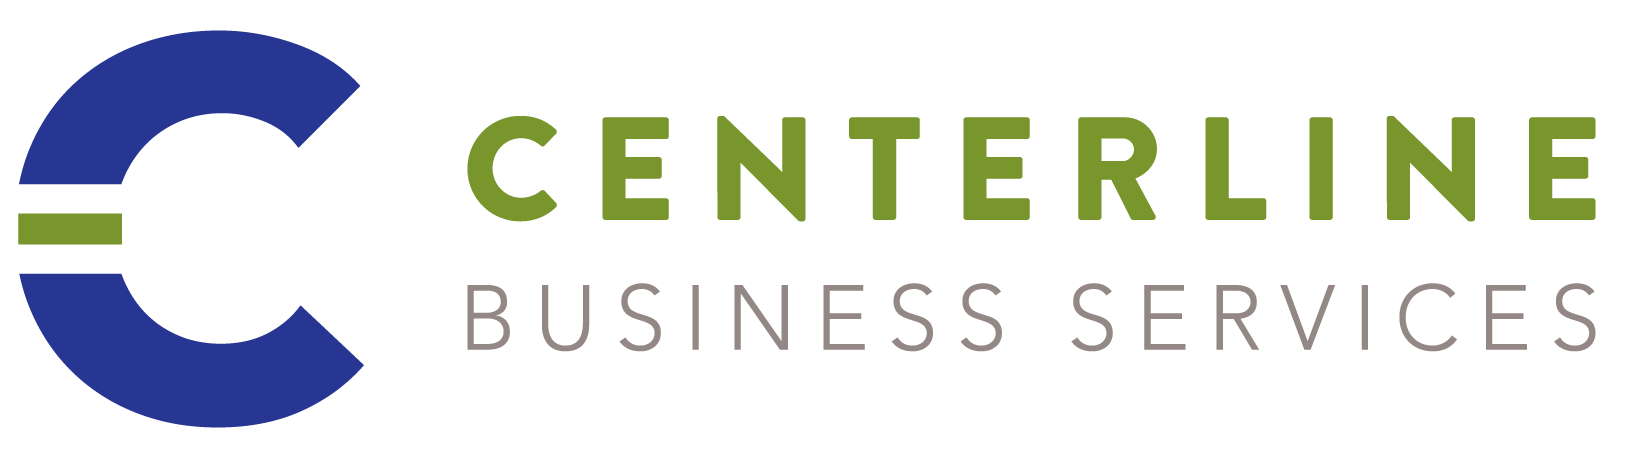 Centerline Business Services logo